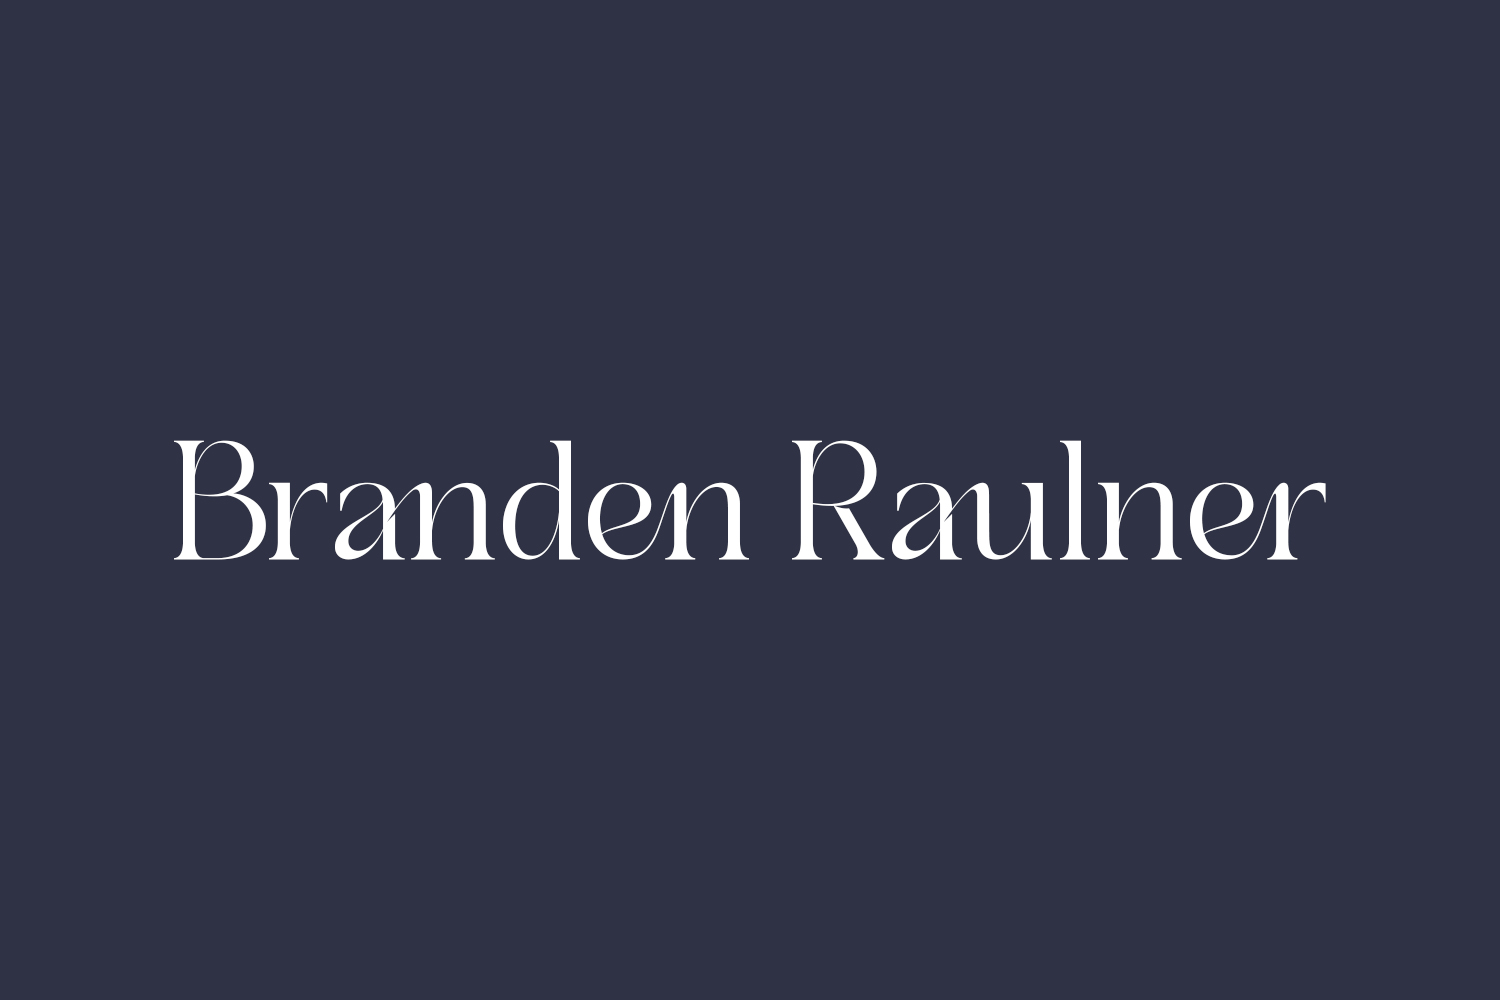 Branden Raulner Free Font